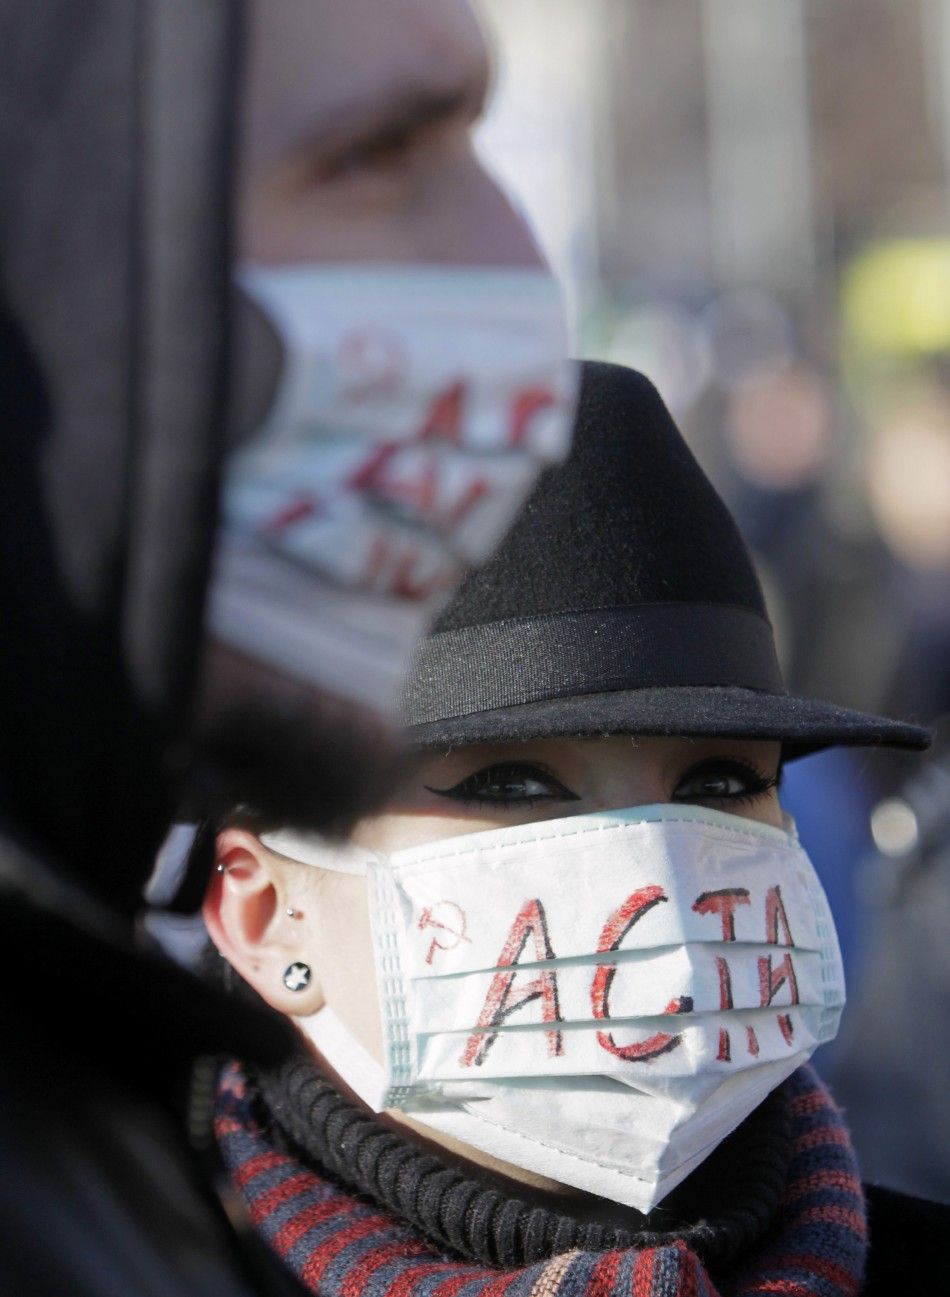 ACTA Protest